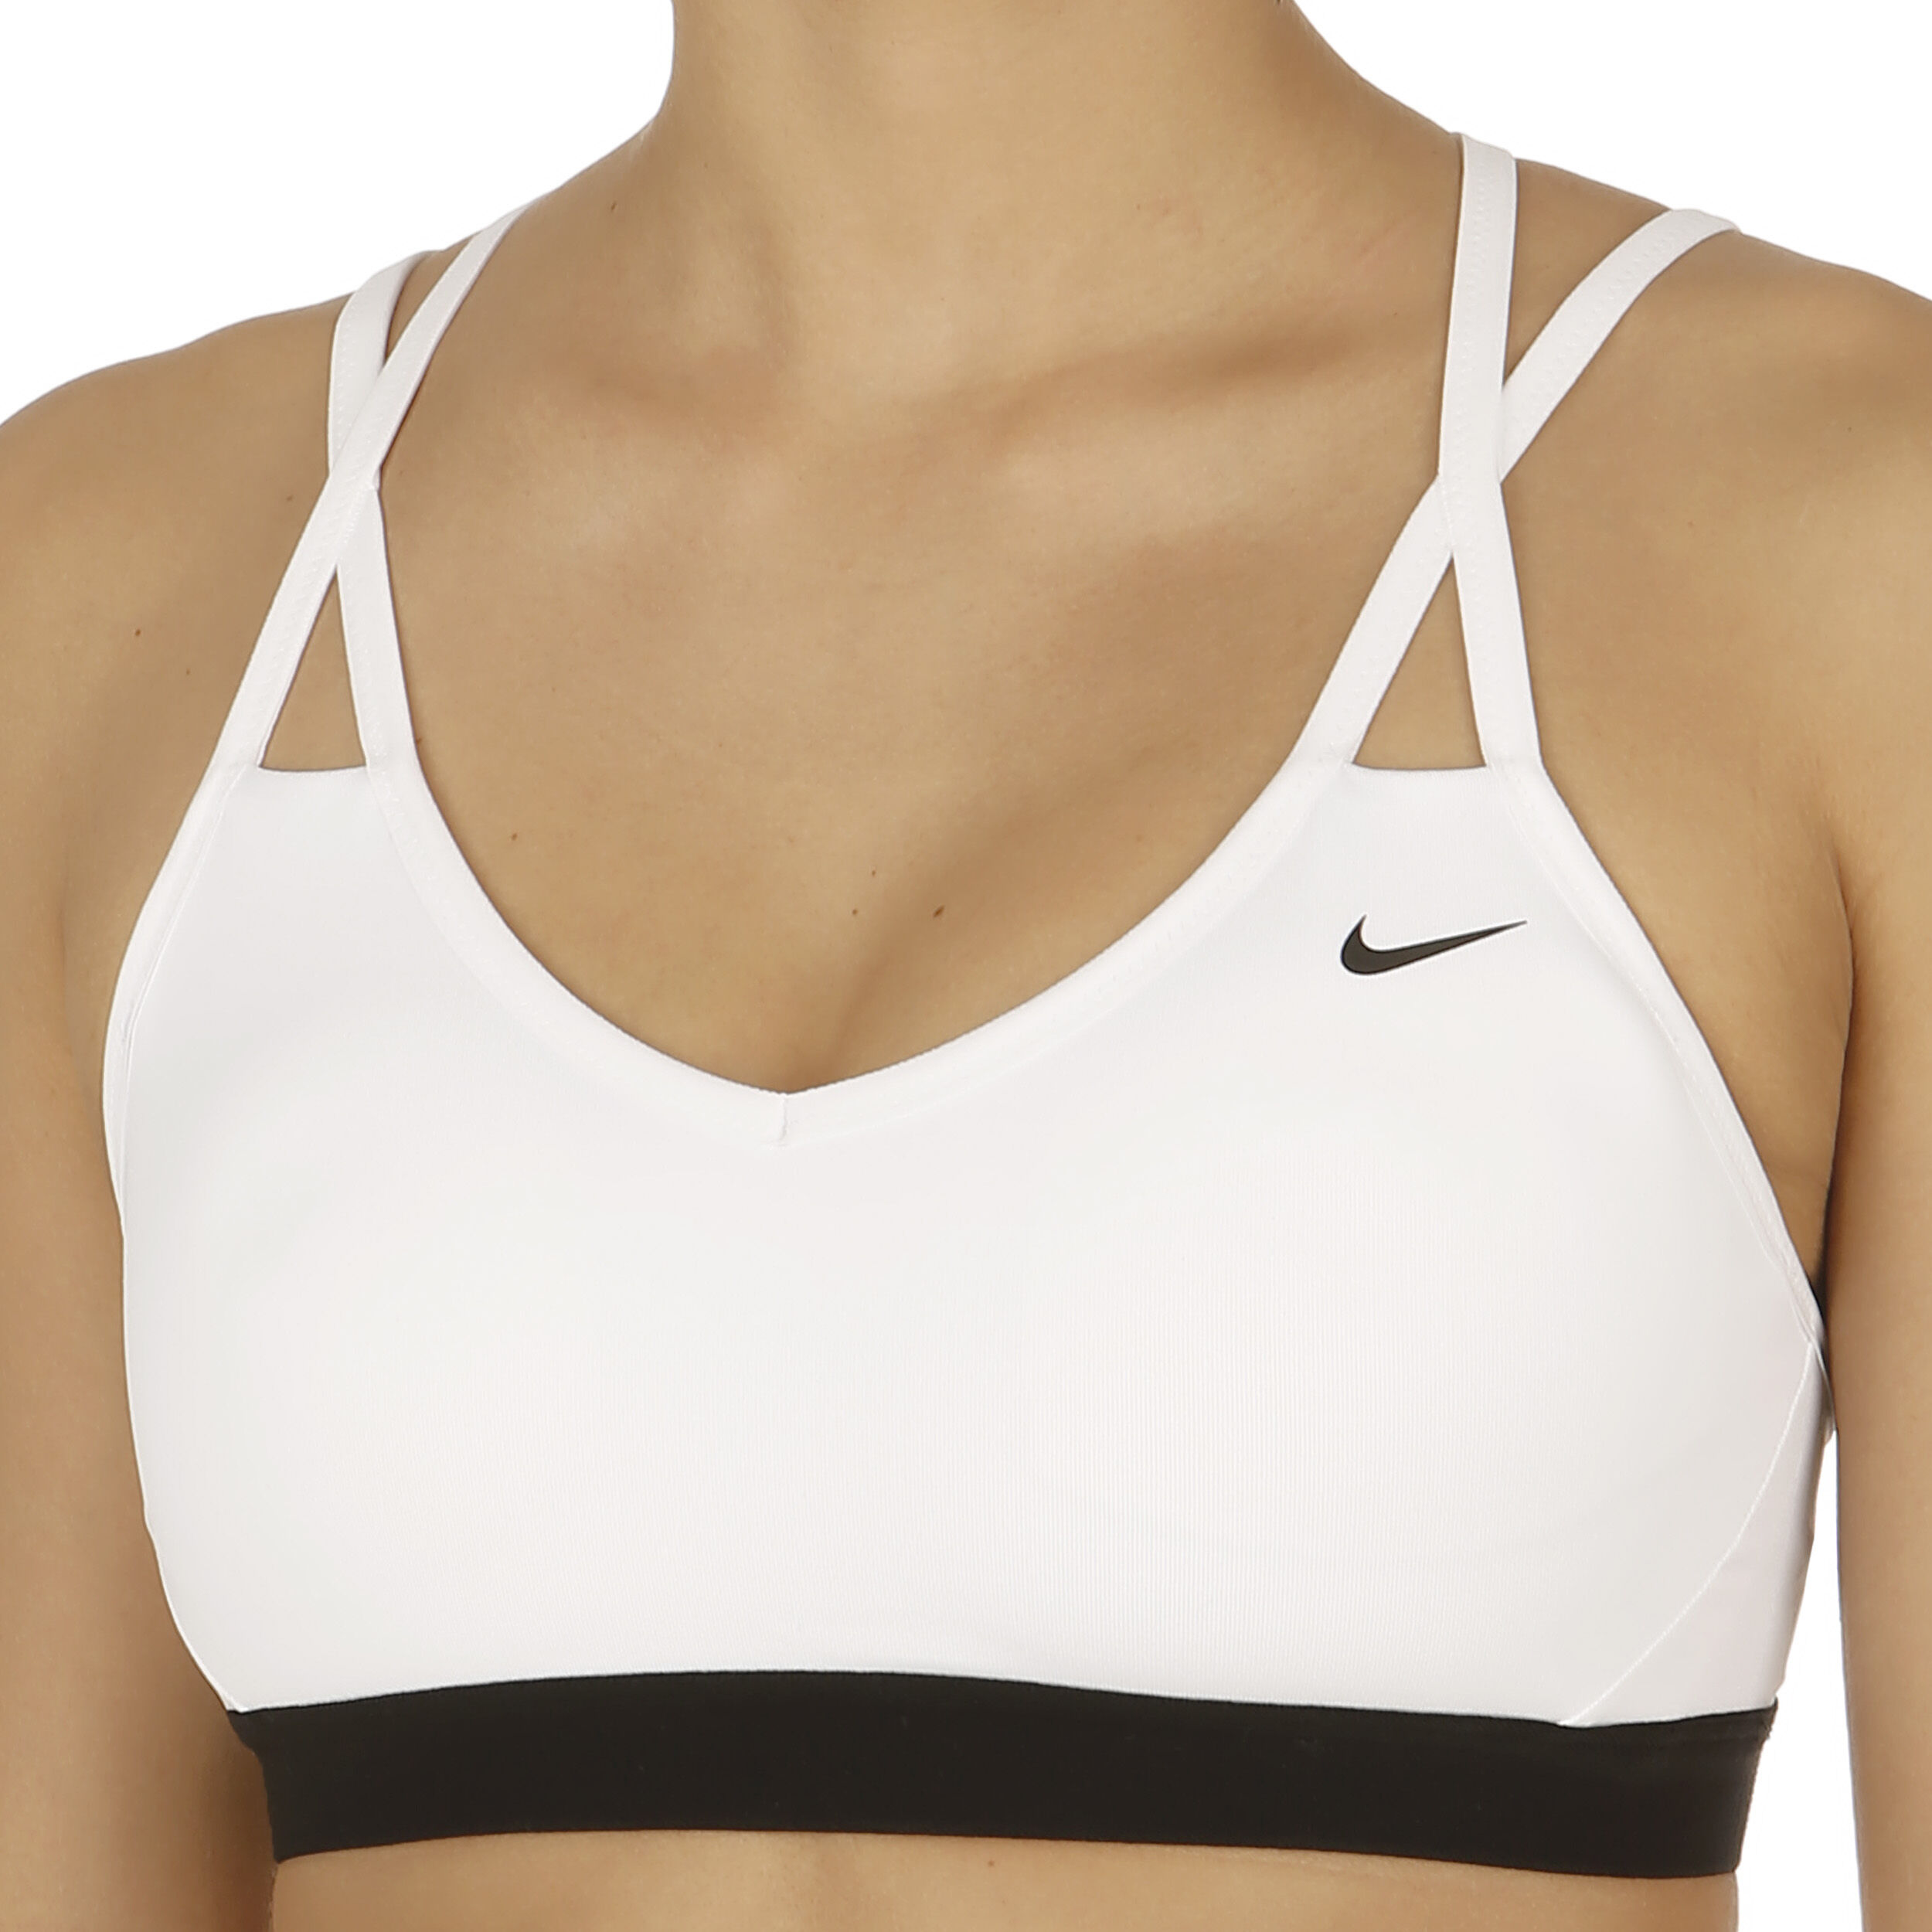 nike white strappy sports bra